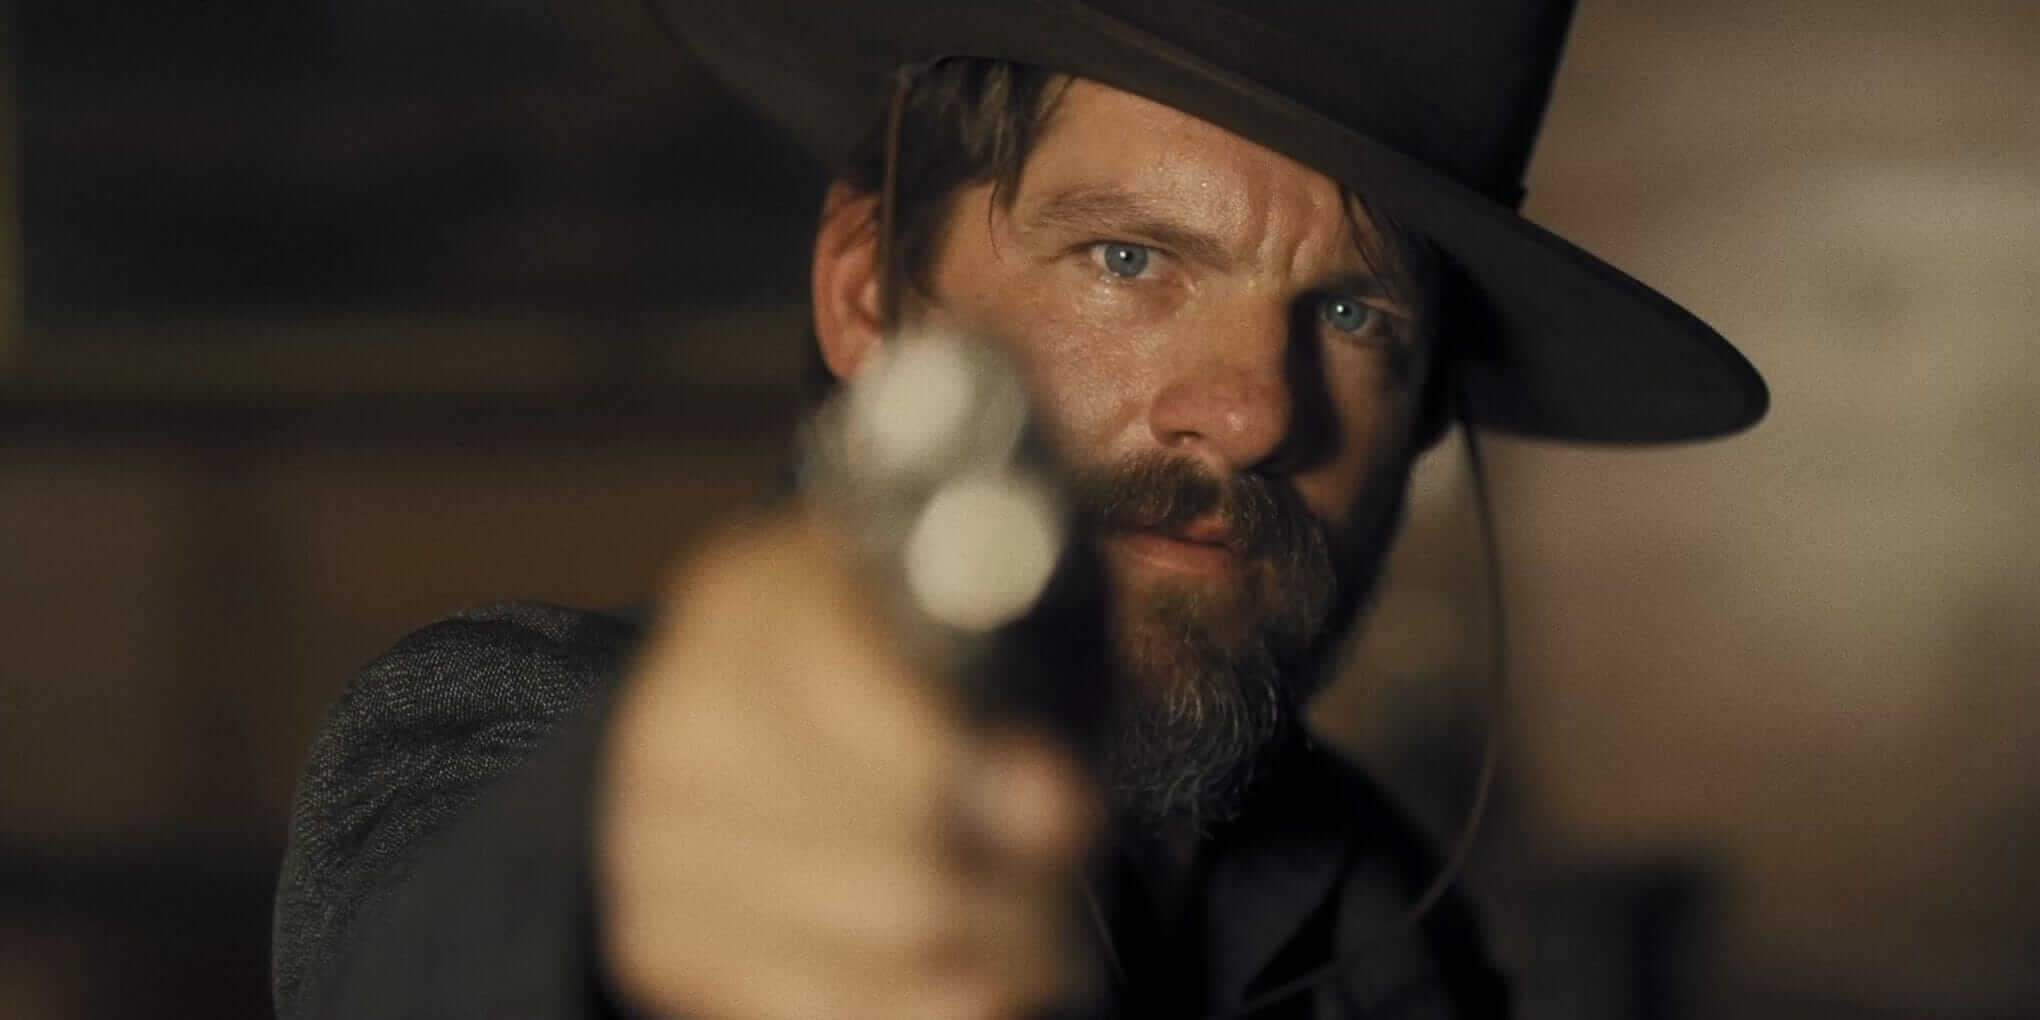 The Pale Door Western Horror - Outlaw Cowboy Dalton